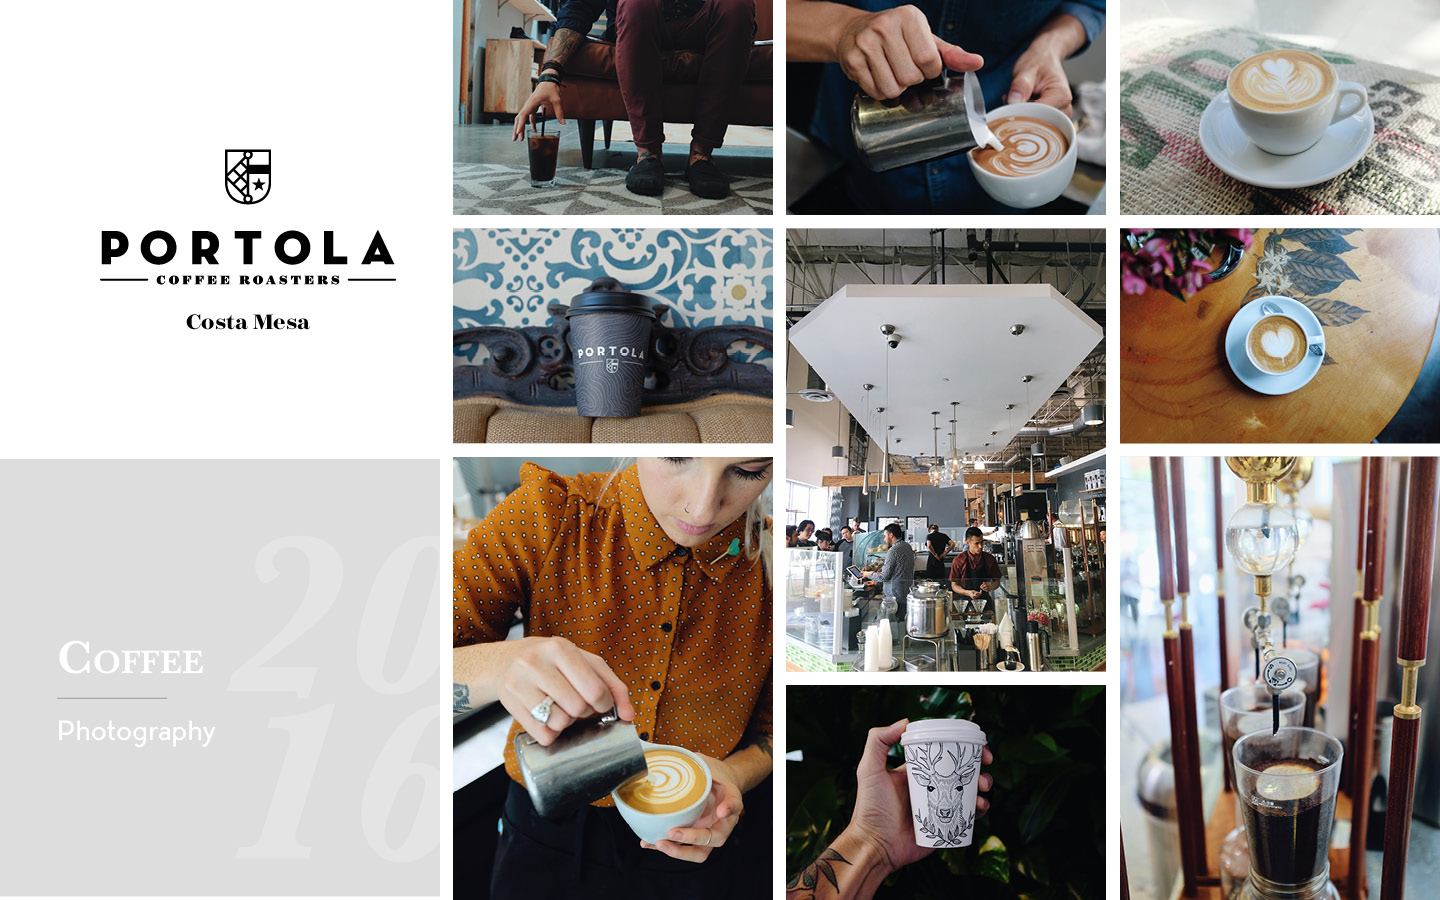 Patrick Hardy Design Social Media Photography - Portola Coffee Roasters Costa Mesa, CA Coffee Photography